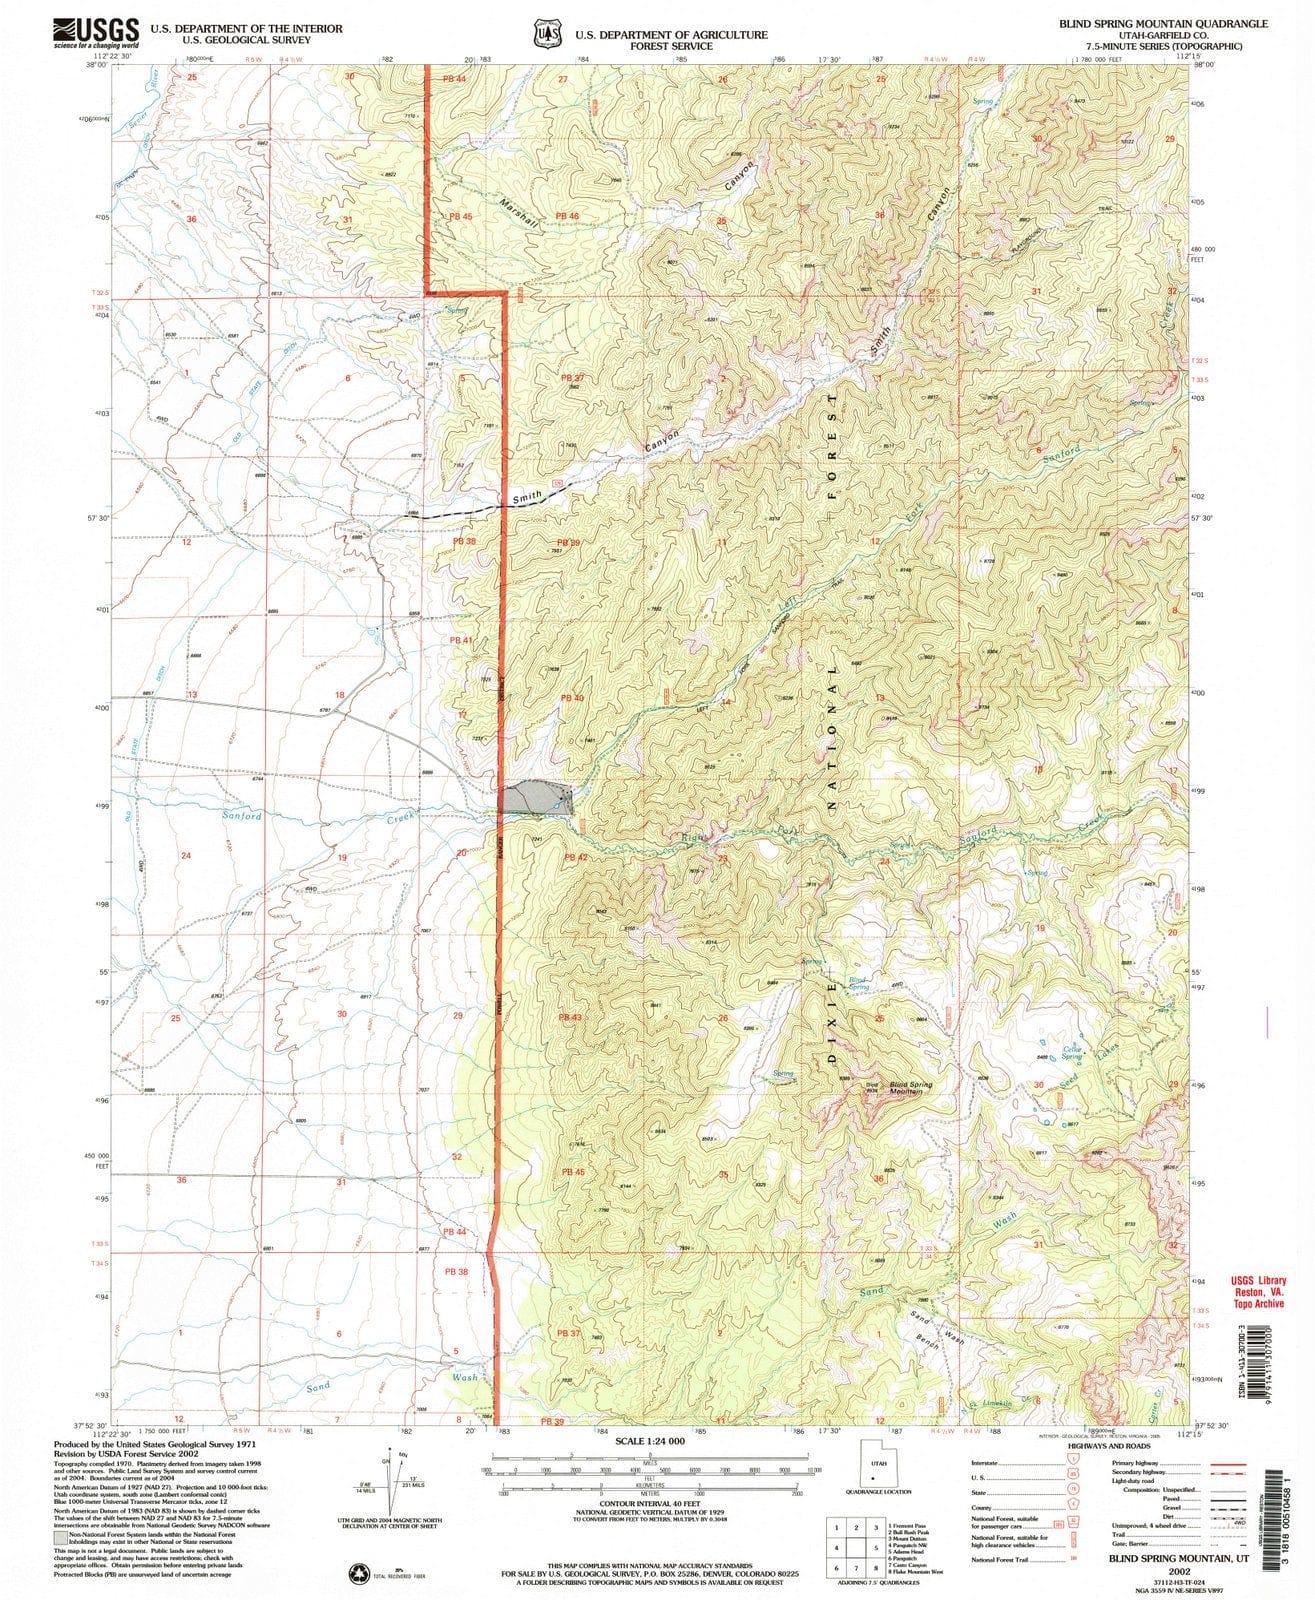 2002 Blind Spring Mountain, UT - Utah - USGS Topographic Map